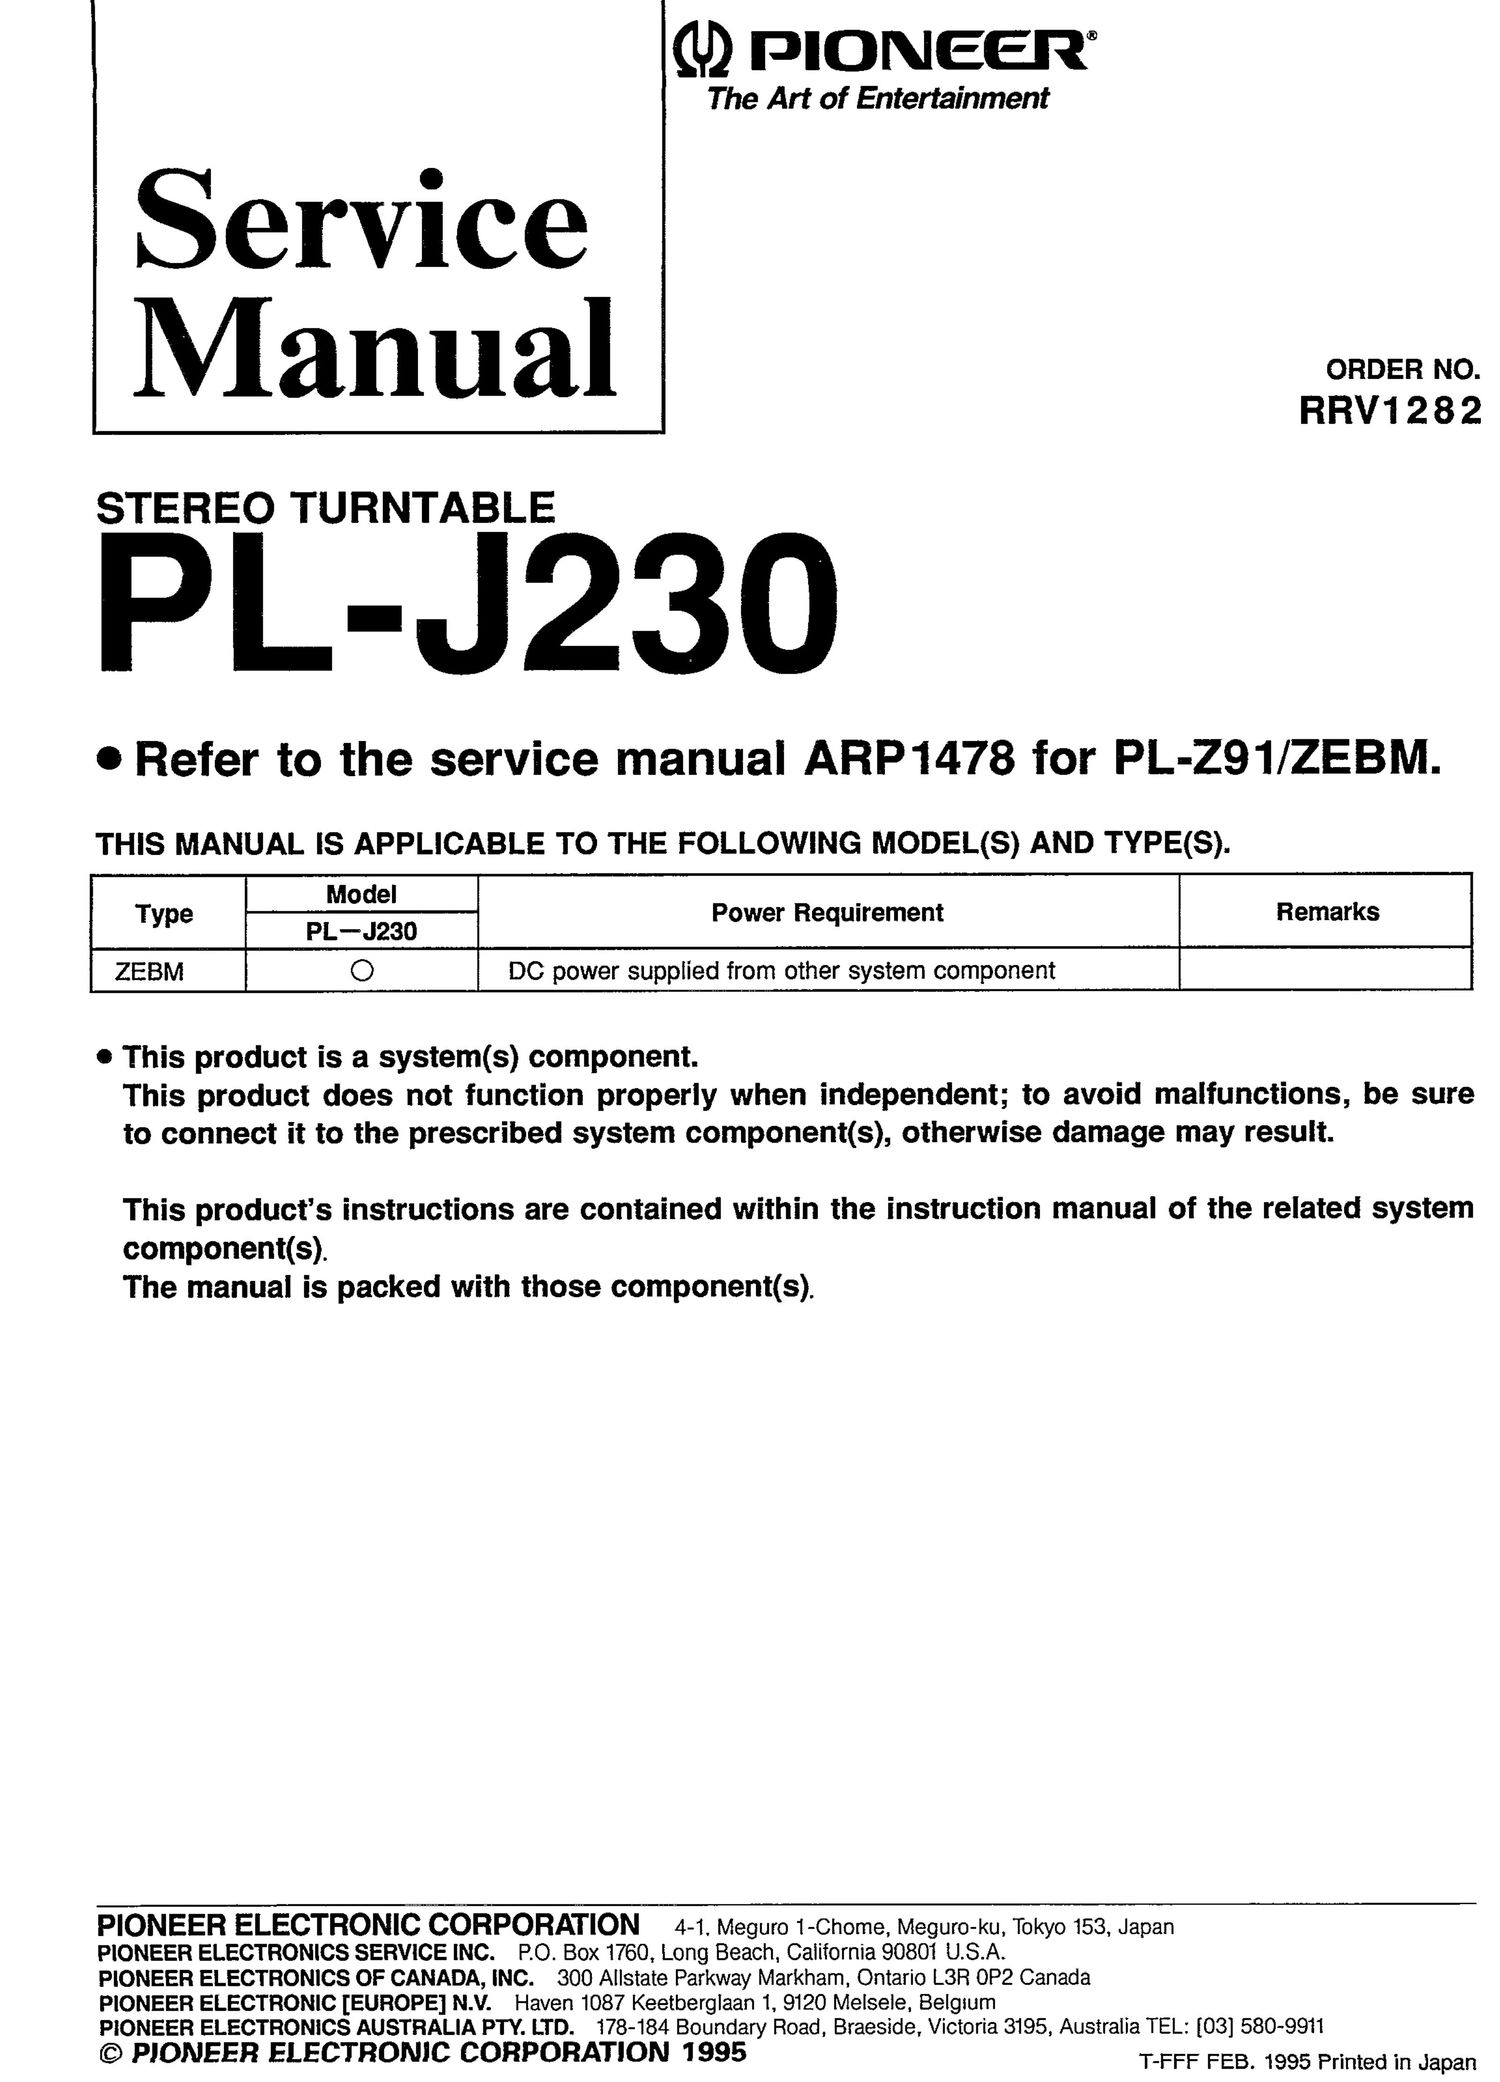 pioneer plj 230 service manual